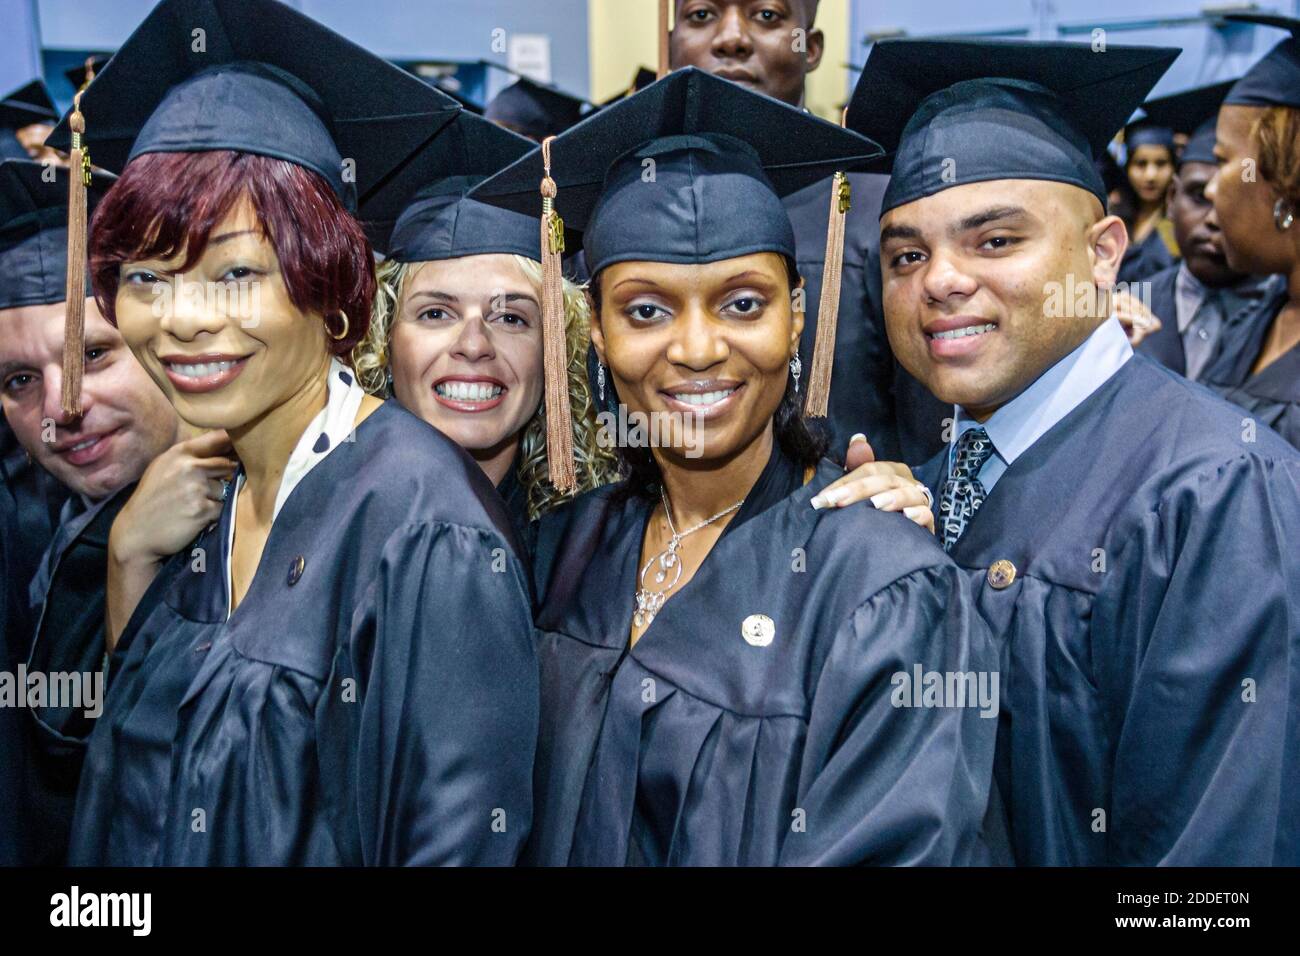 Florida,Miami Beach Convention Center,centre St. Thomas University Commencement,graduation ceremony student students cap gown graduate graduates,Black Stock Photo